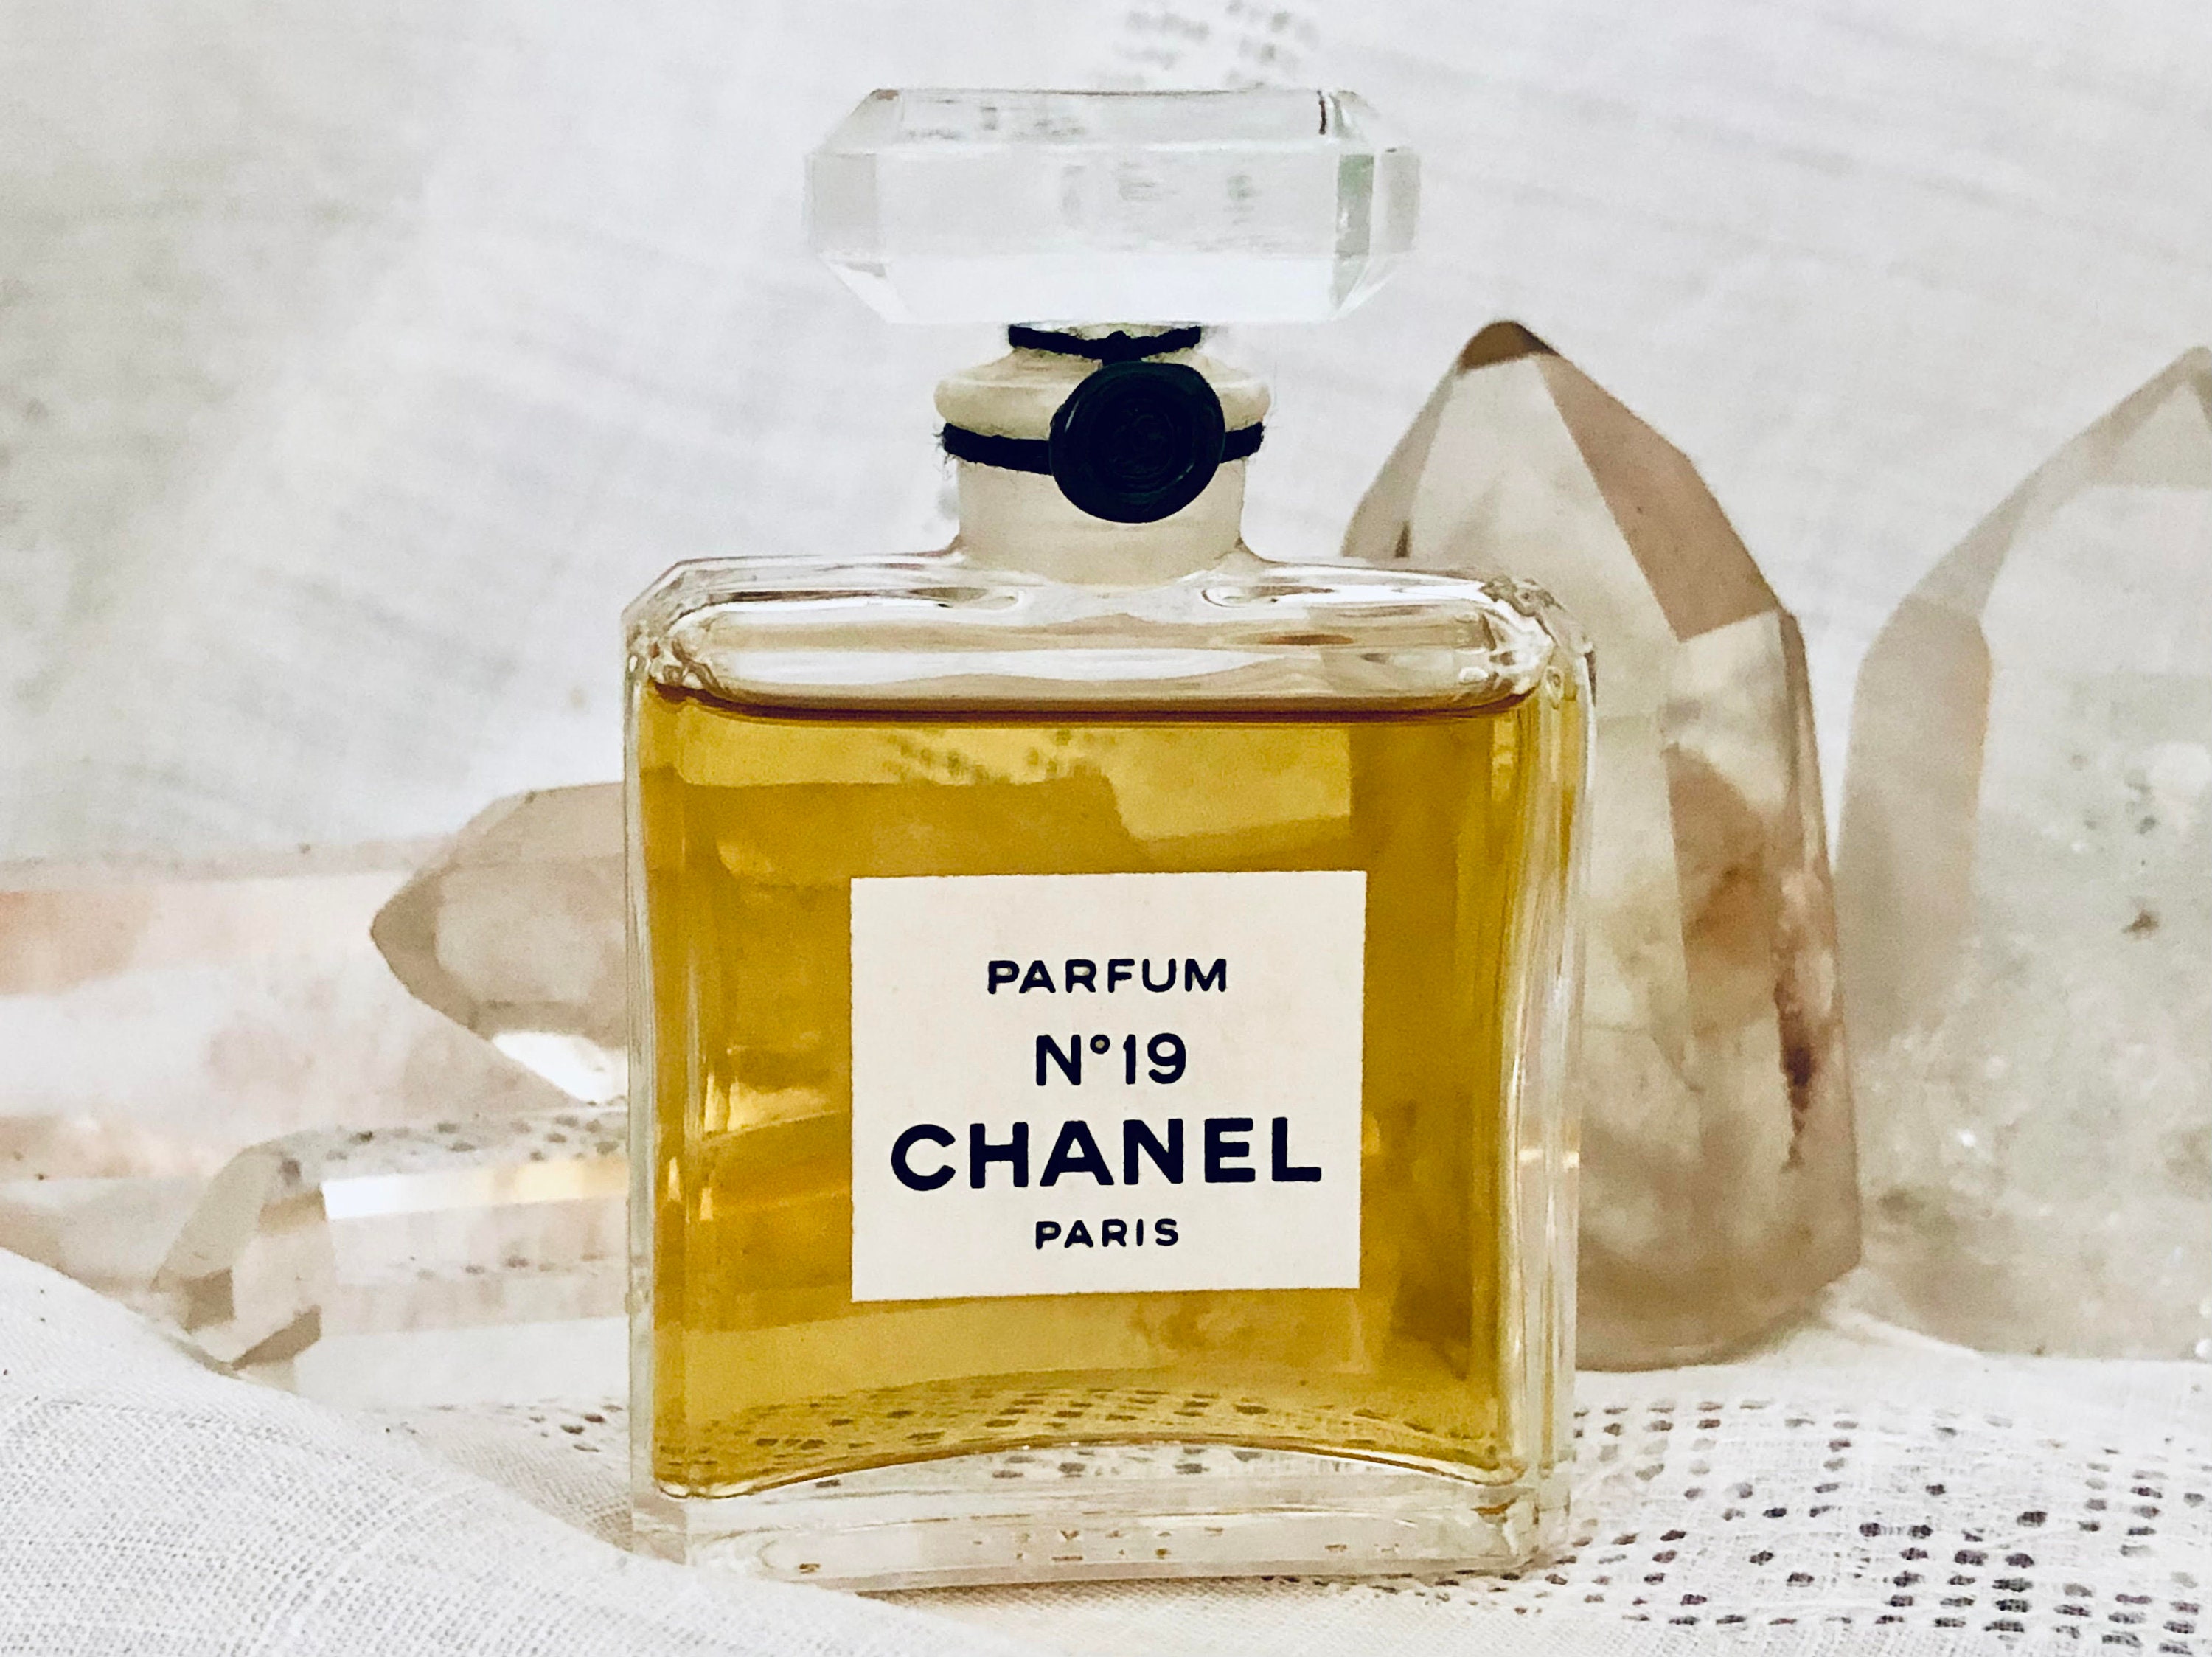 Chanel No. 19 15 Ml. or 0.5 Oz. Flacon Parfum Extrait -  Singapore